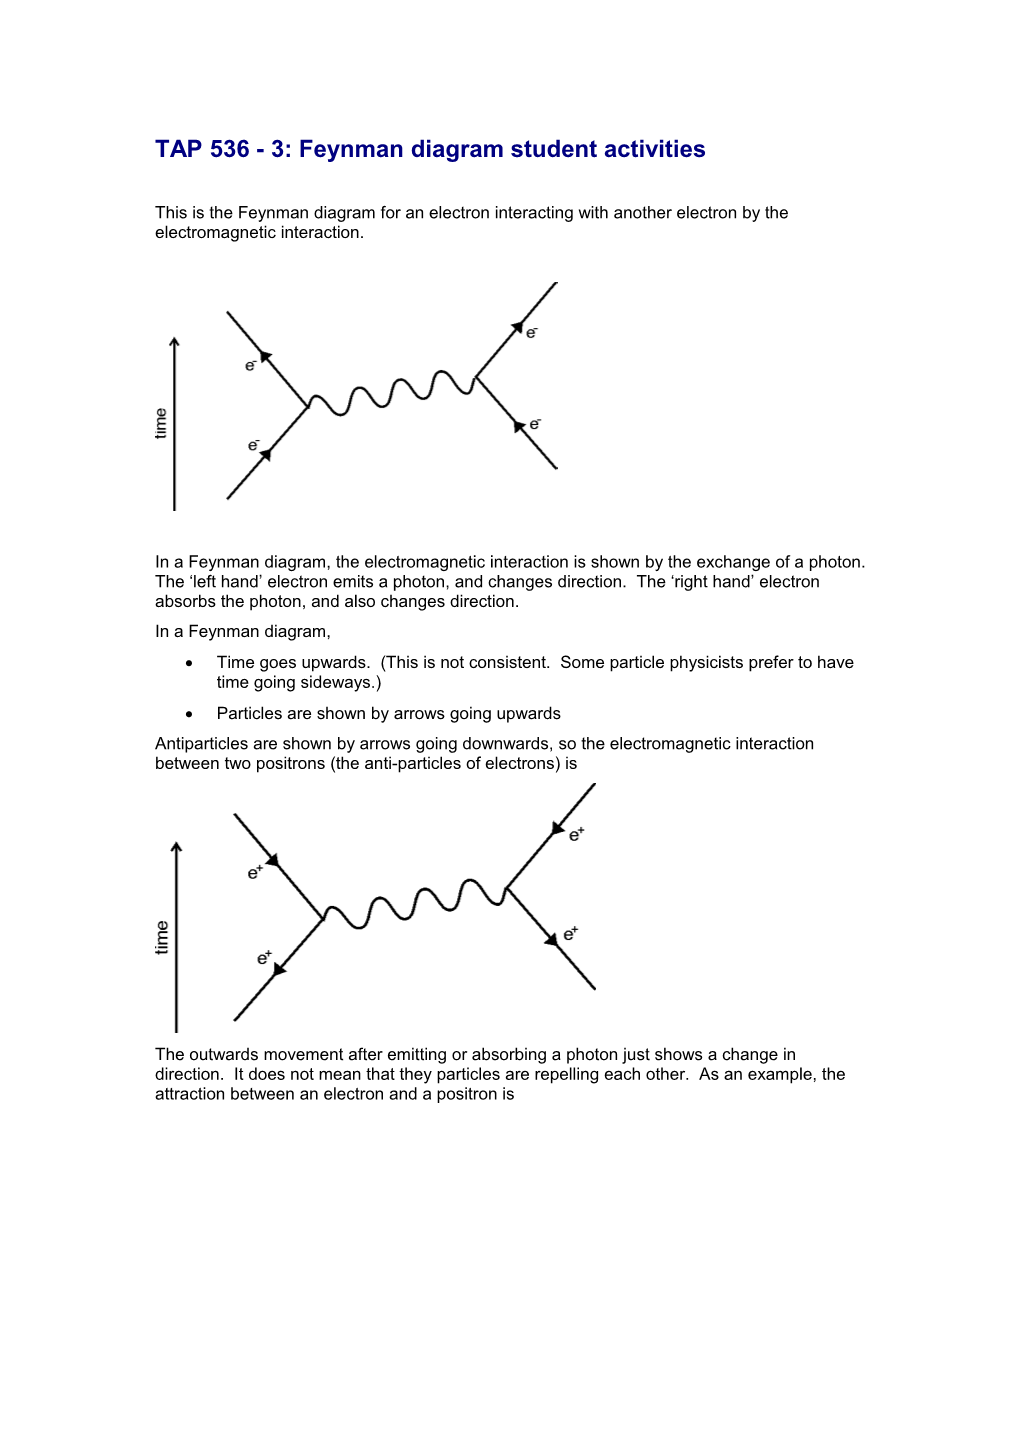 TAP 536- 6: Feynman Diagram Student Activities